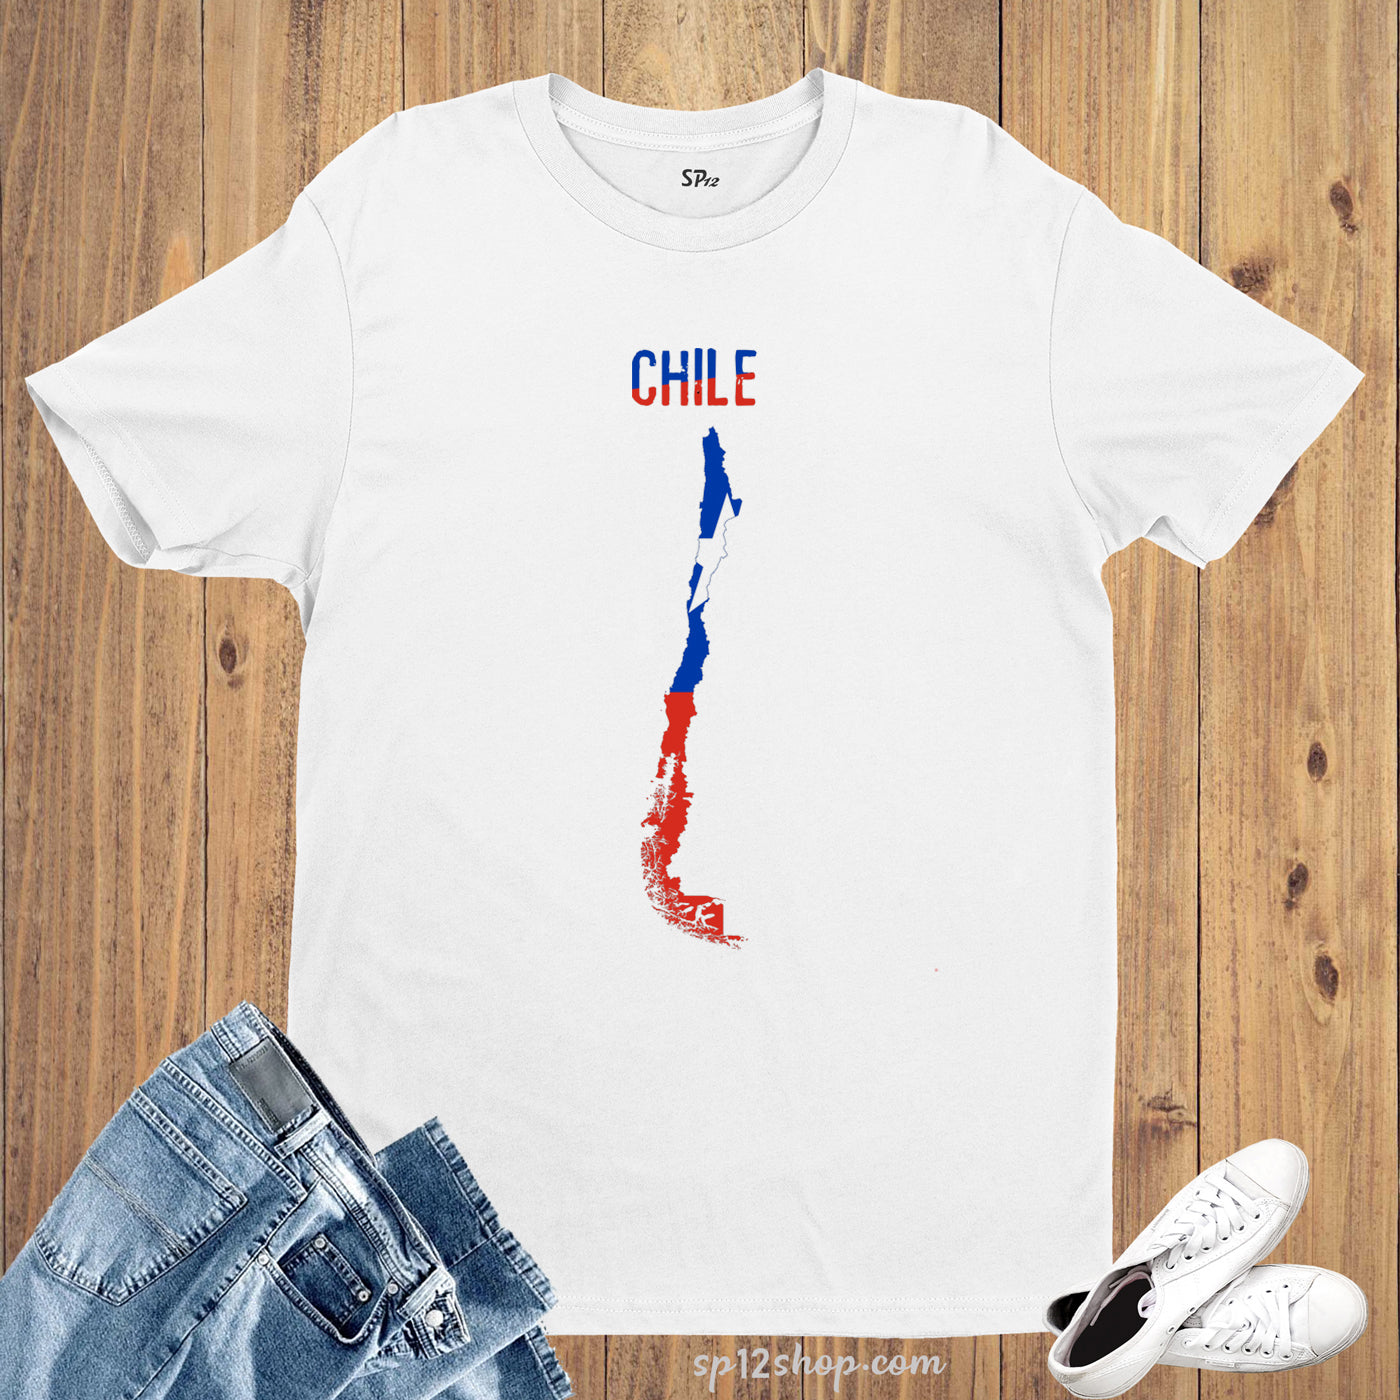 Chile Flag T Shirt Olympics FIFA World Cup Country Flag Tee Shirt